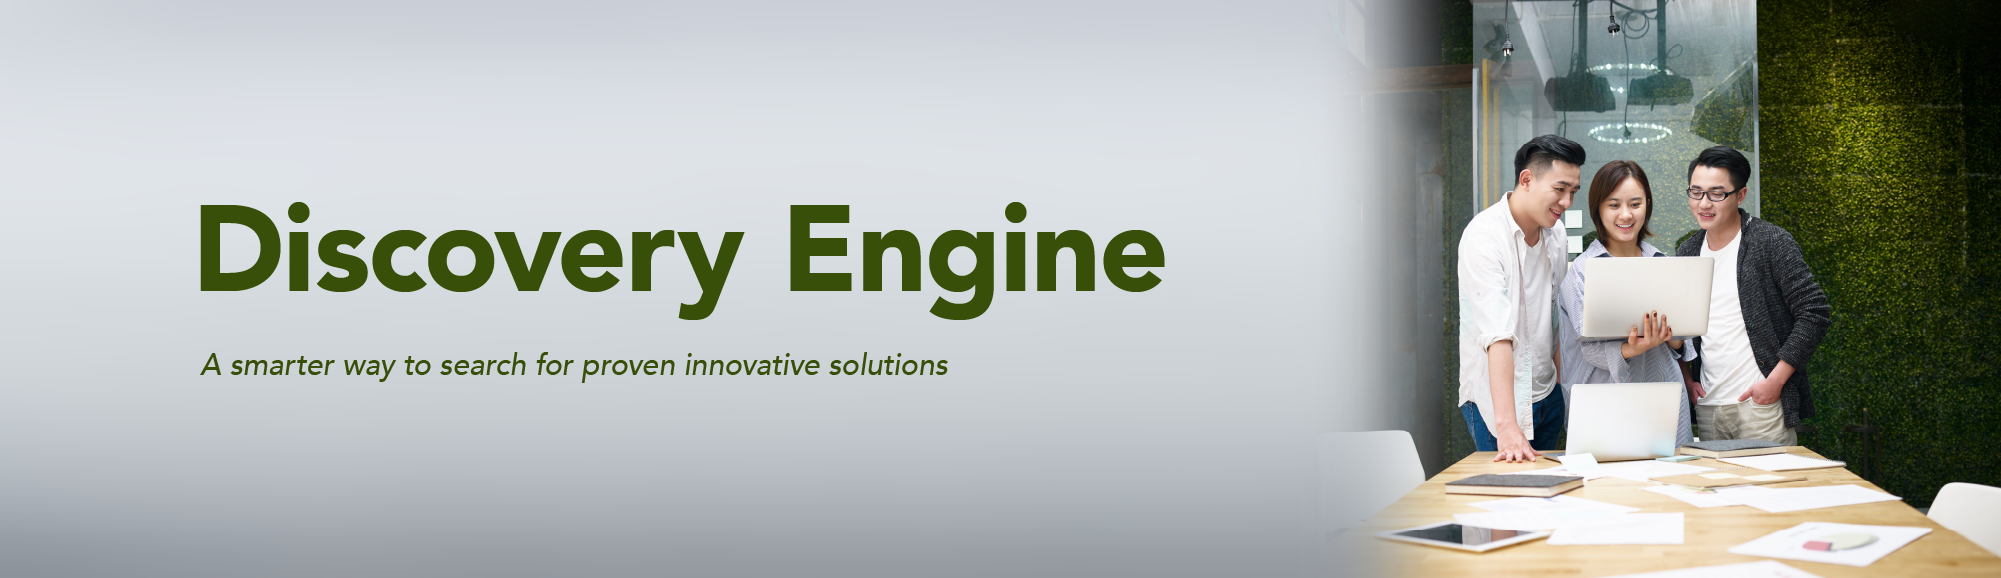 Open Innovation Platform - Discovery Engine